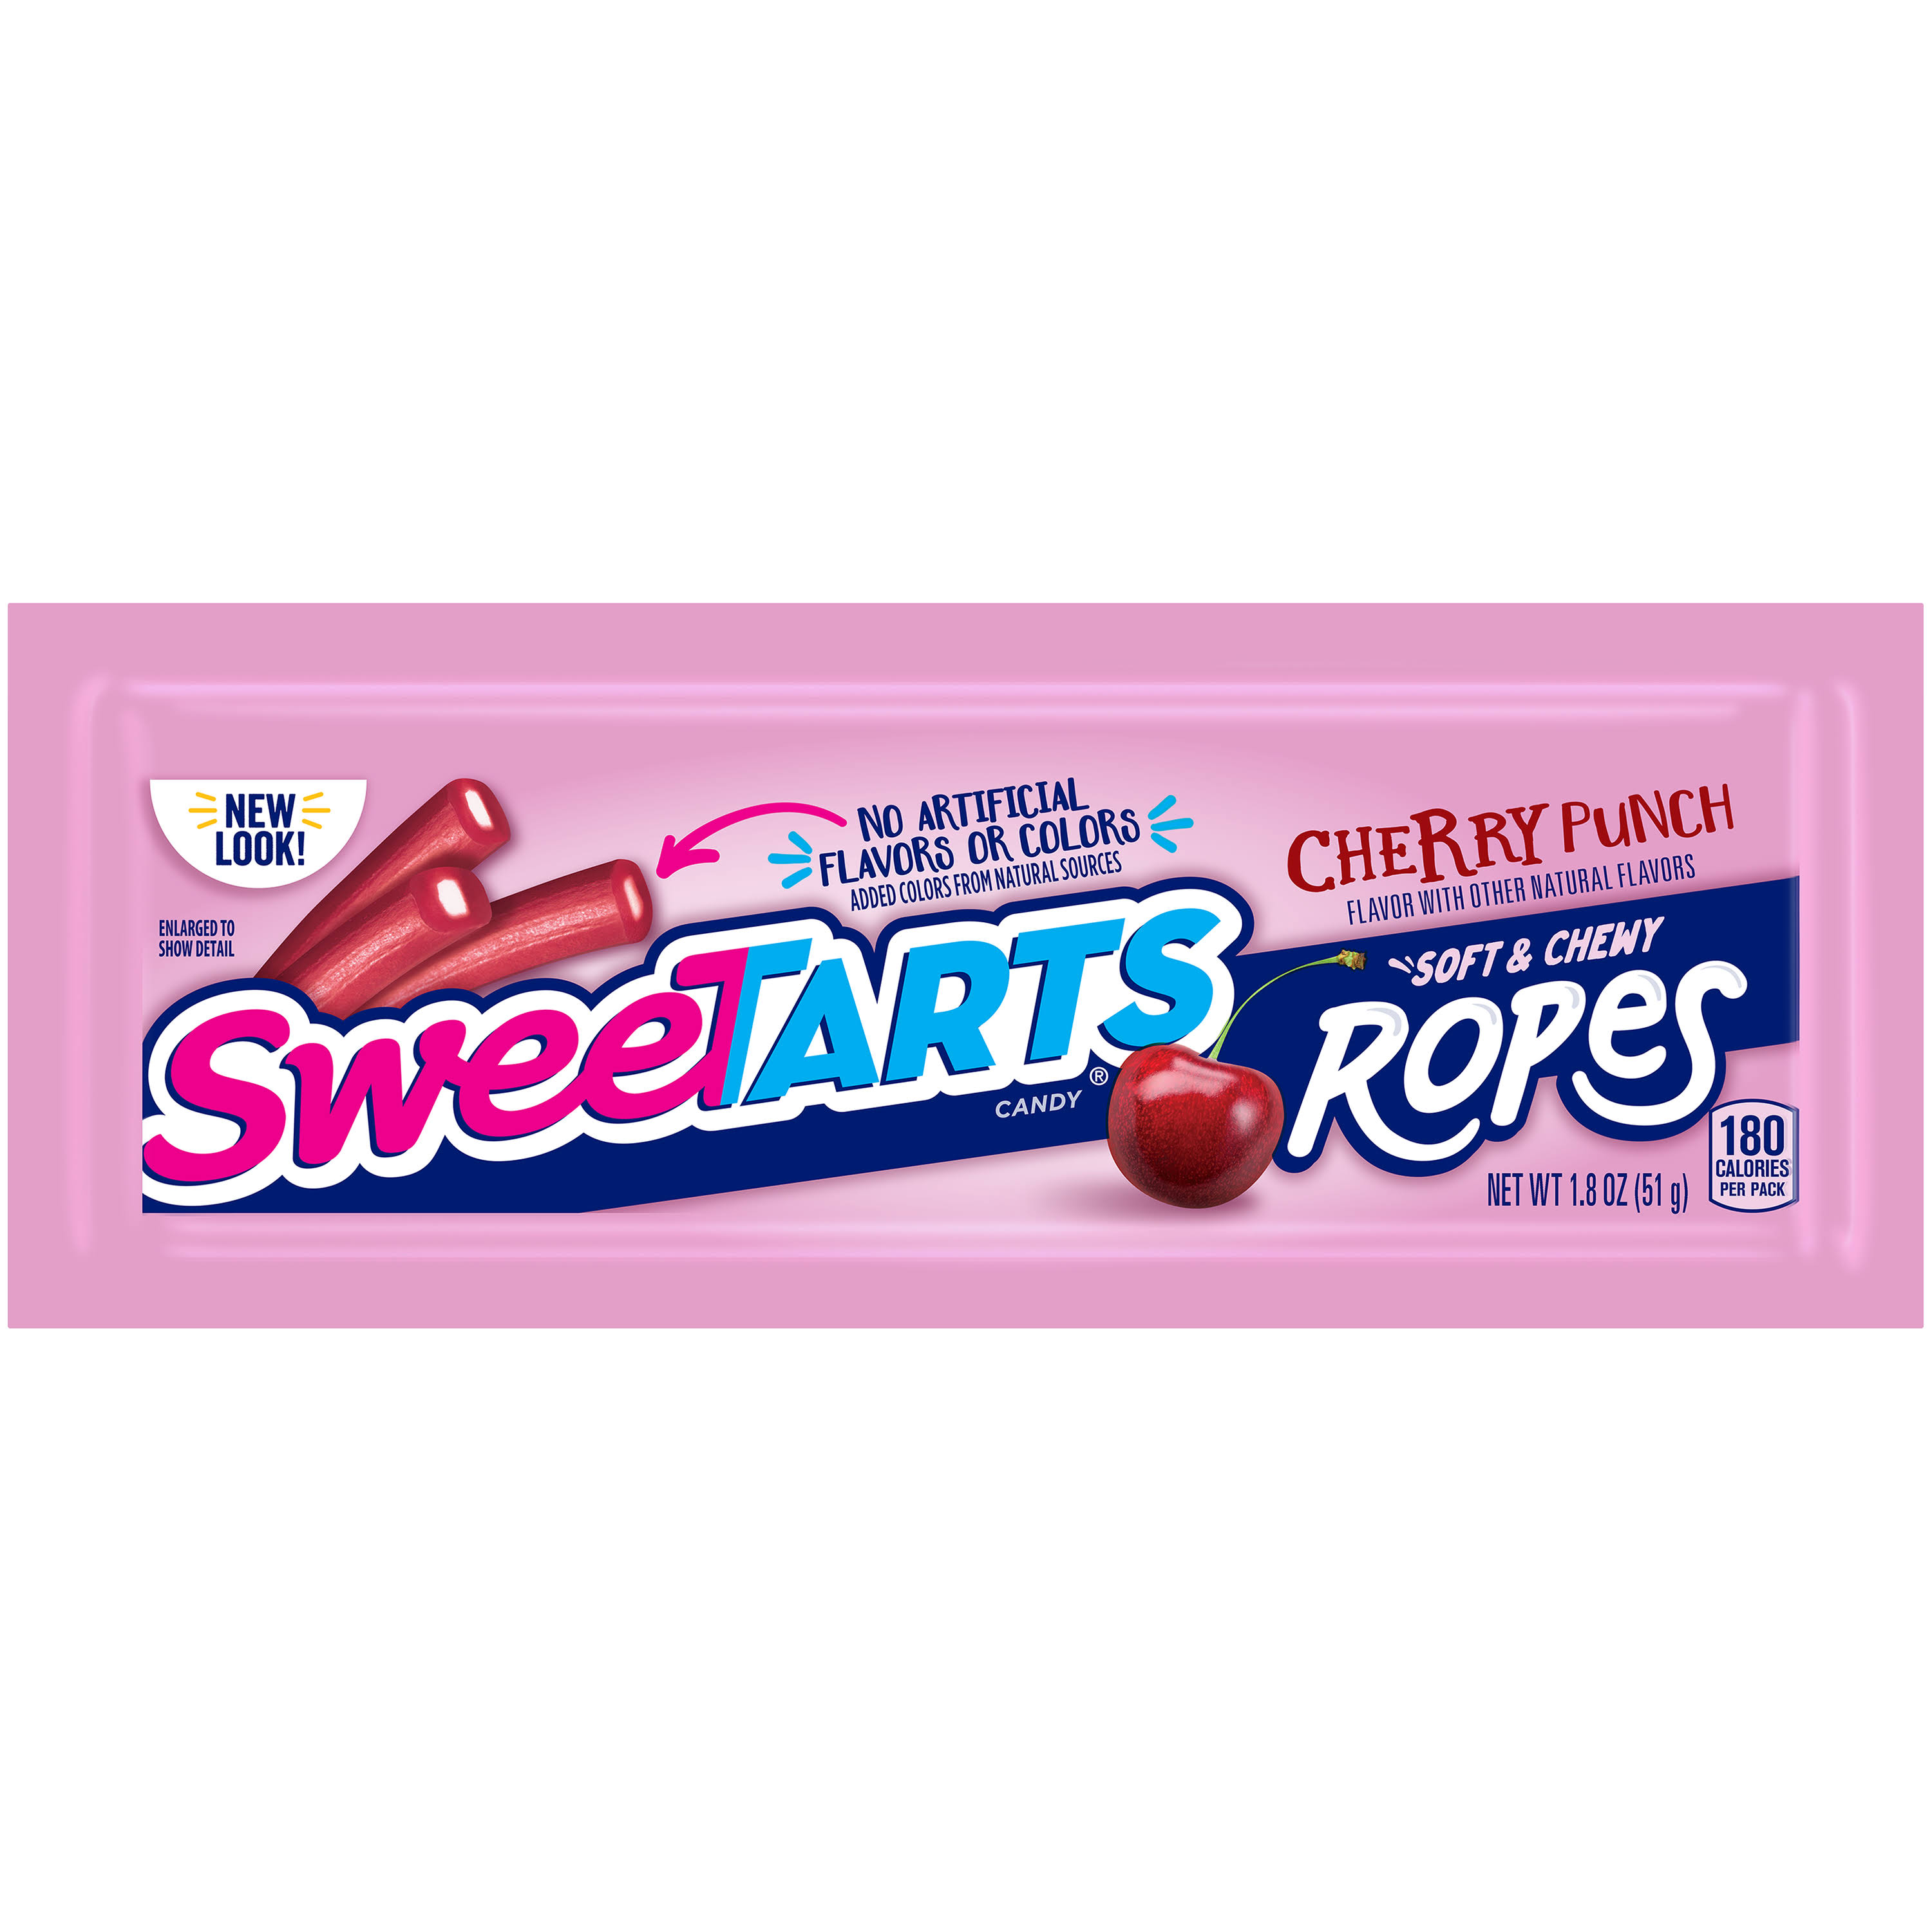 Wonka Sweettarts Soft Chewy & Rope - Cherry Punch, x4